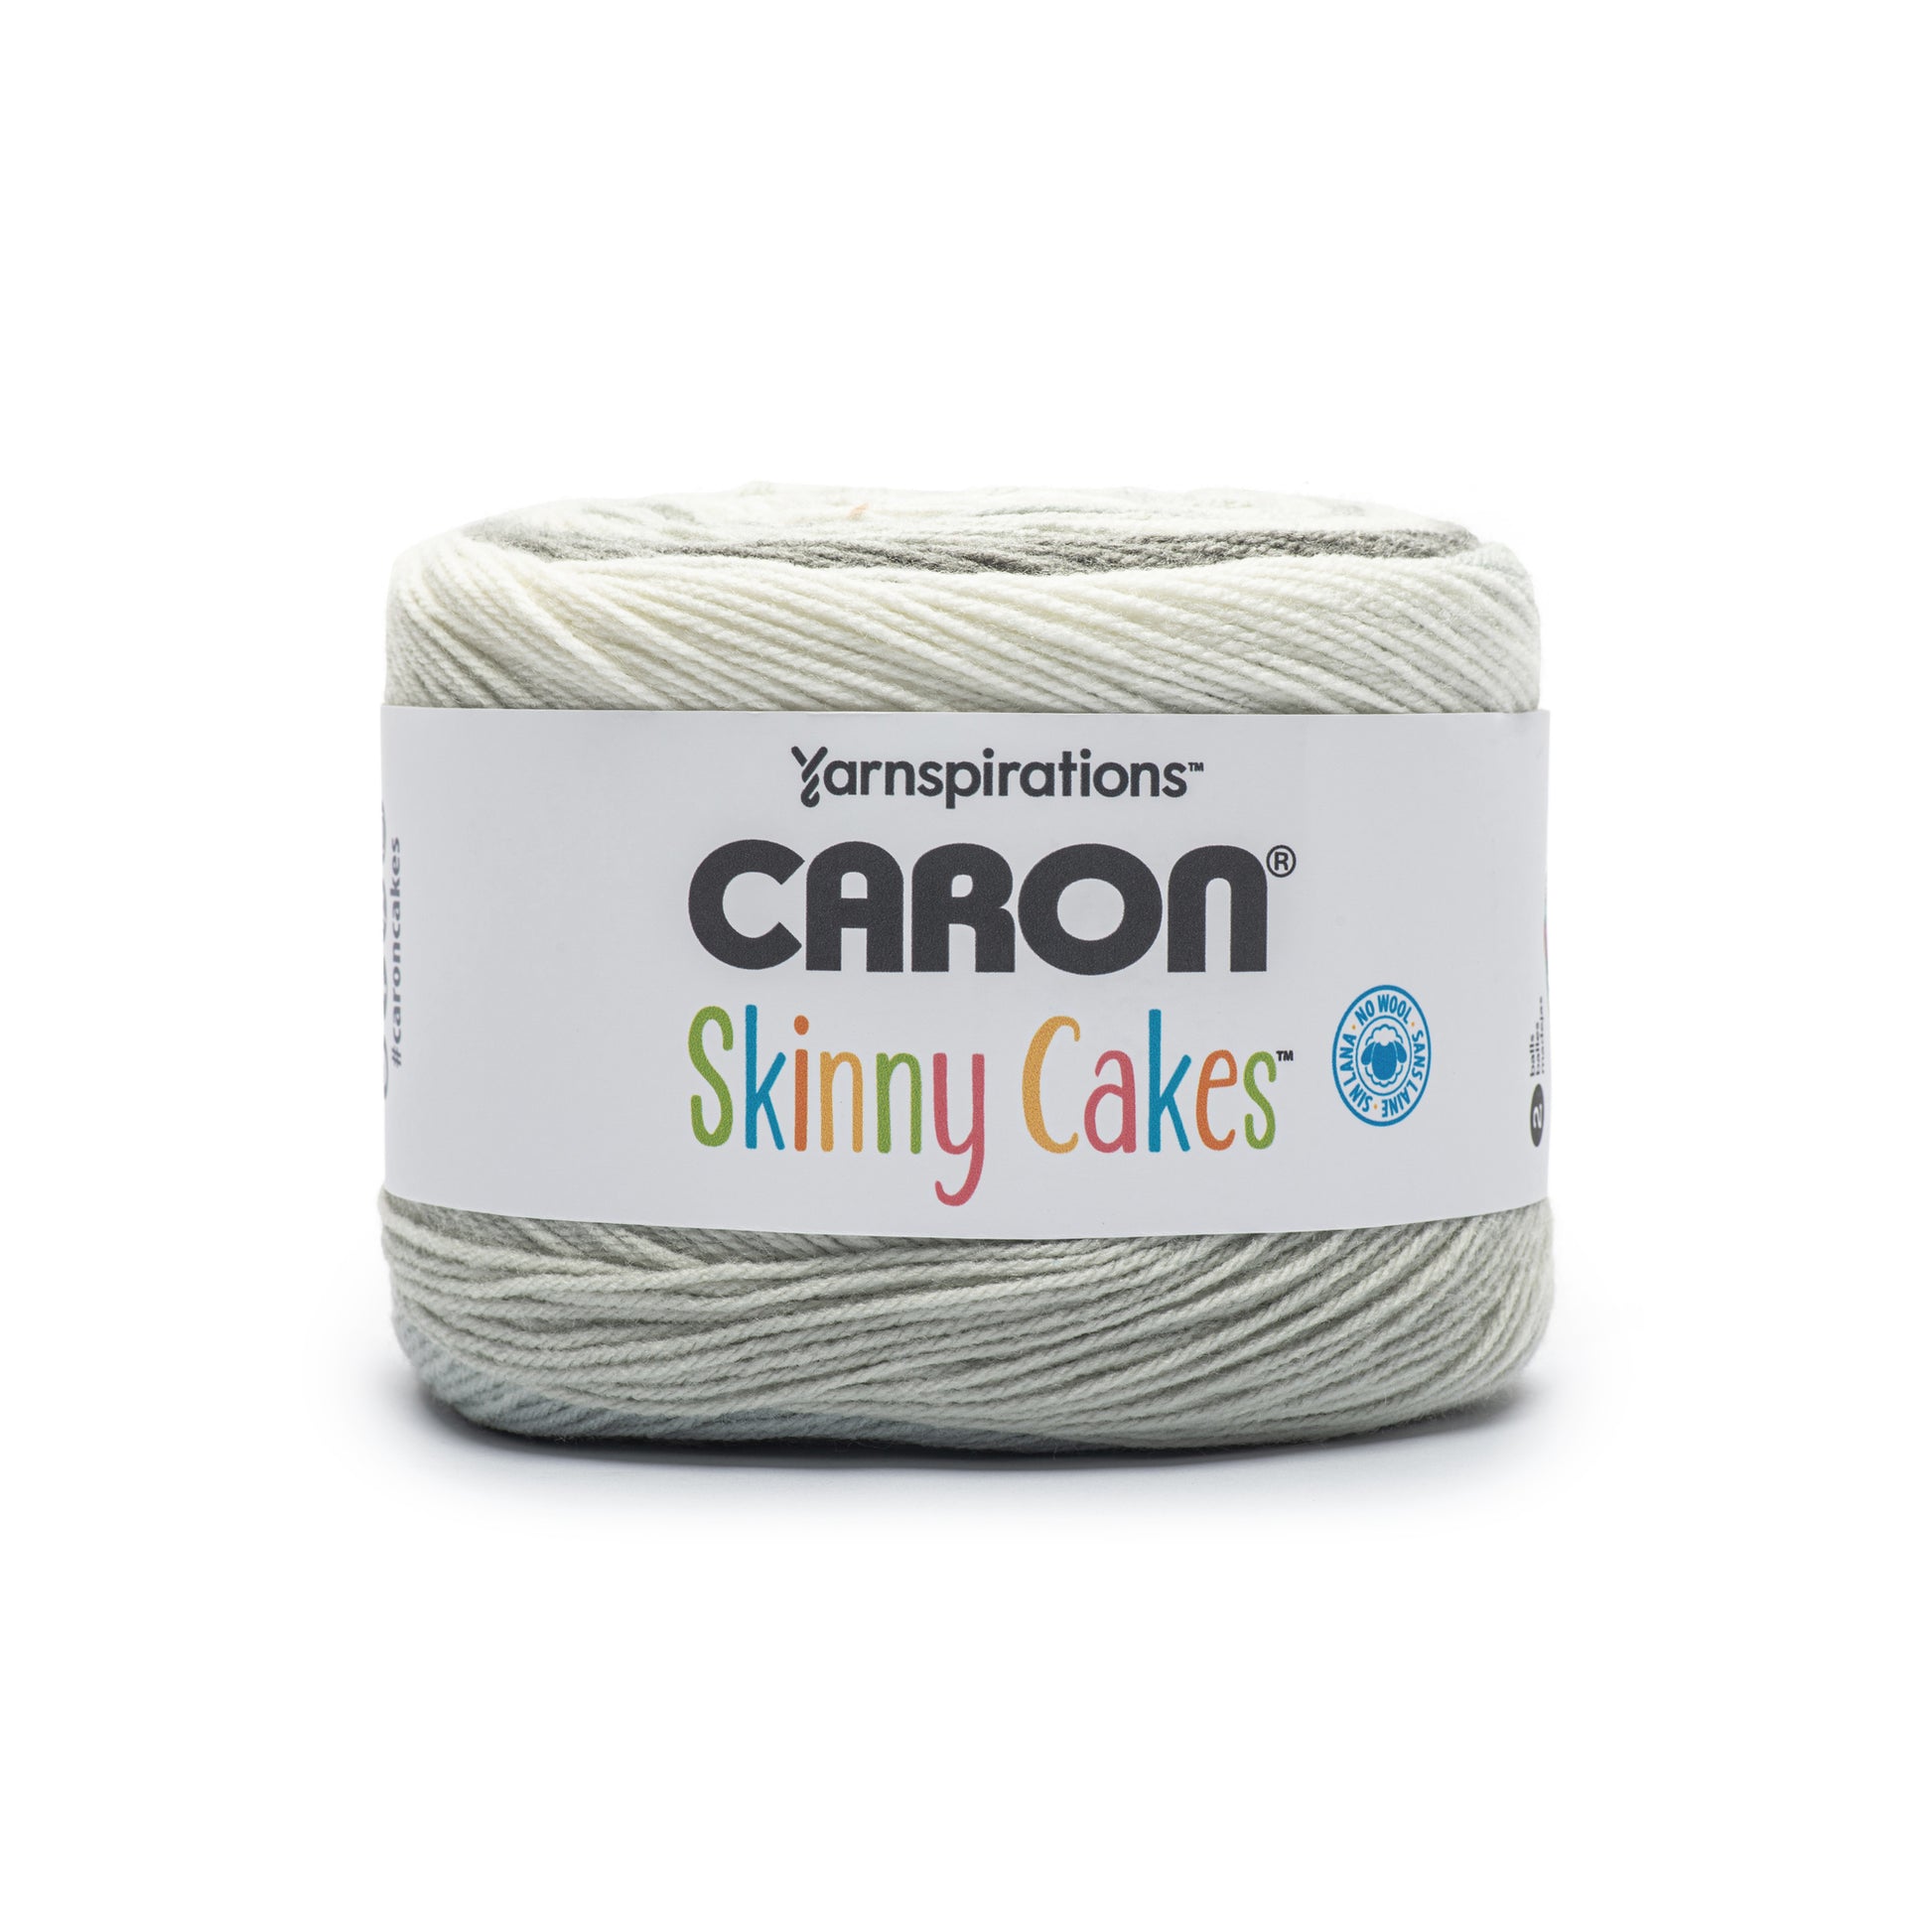 Yarnspirations Caron Chunky Cakes Yarn - Galaxy Macarons - 9.8 oz